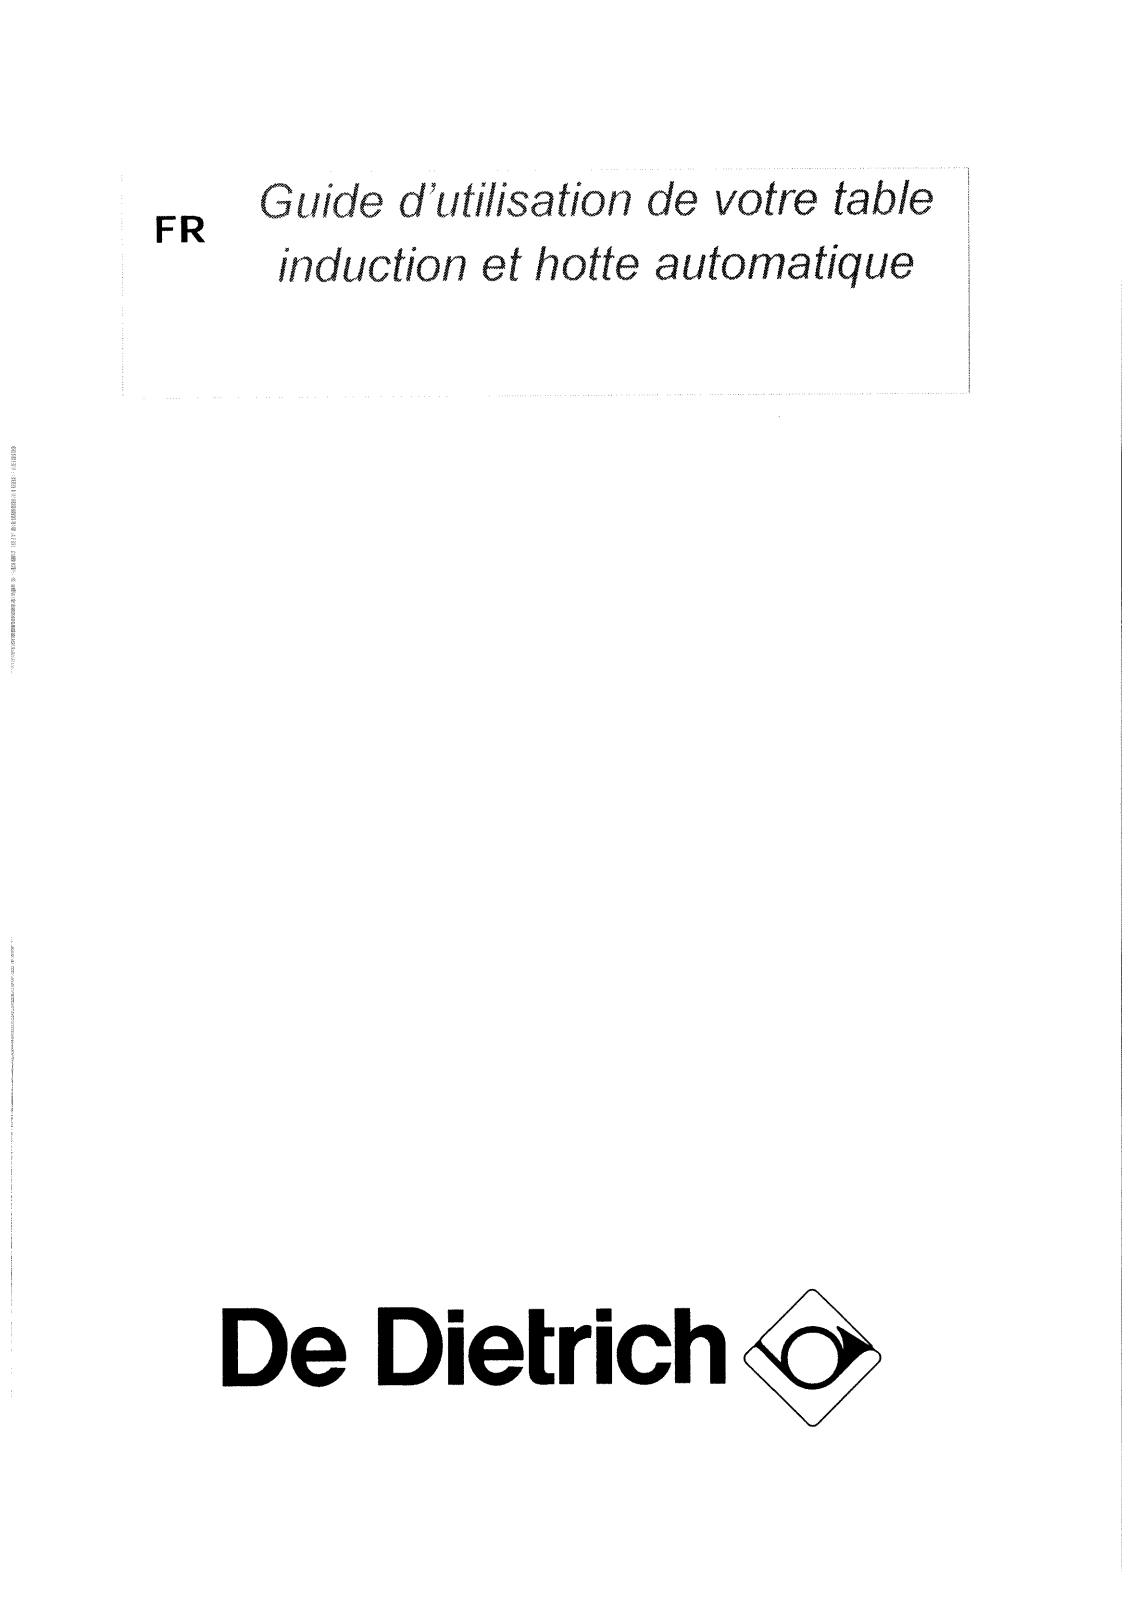 De dietrich DTI199XE1, DTI199XE1HD User Manual